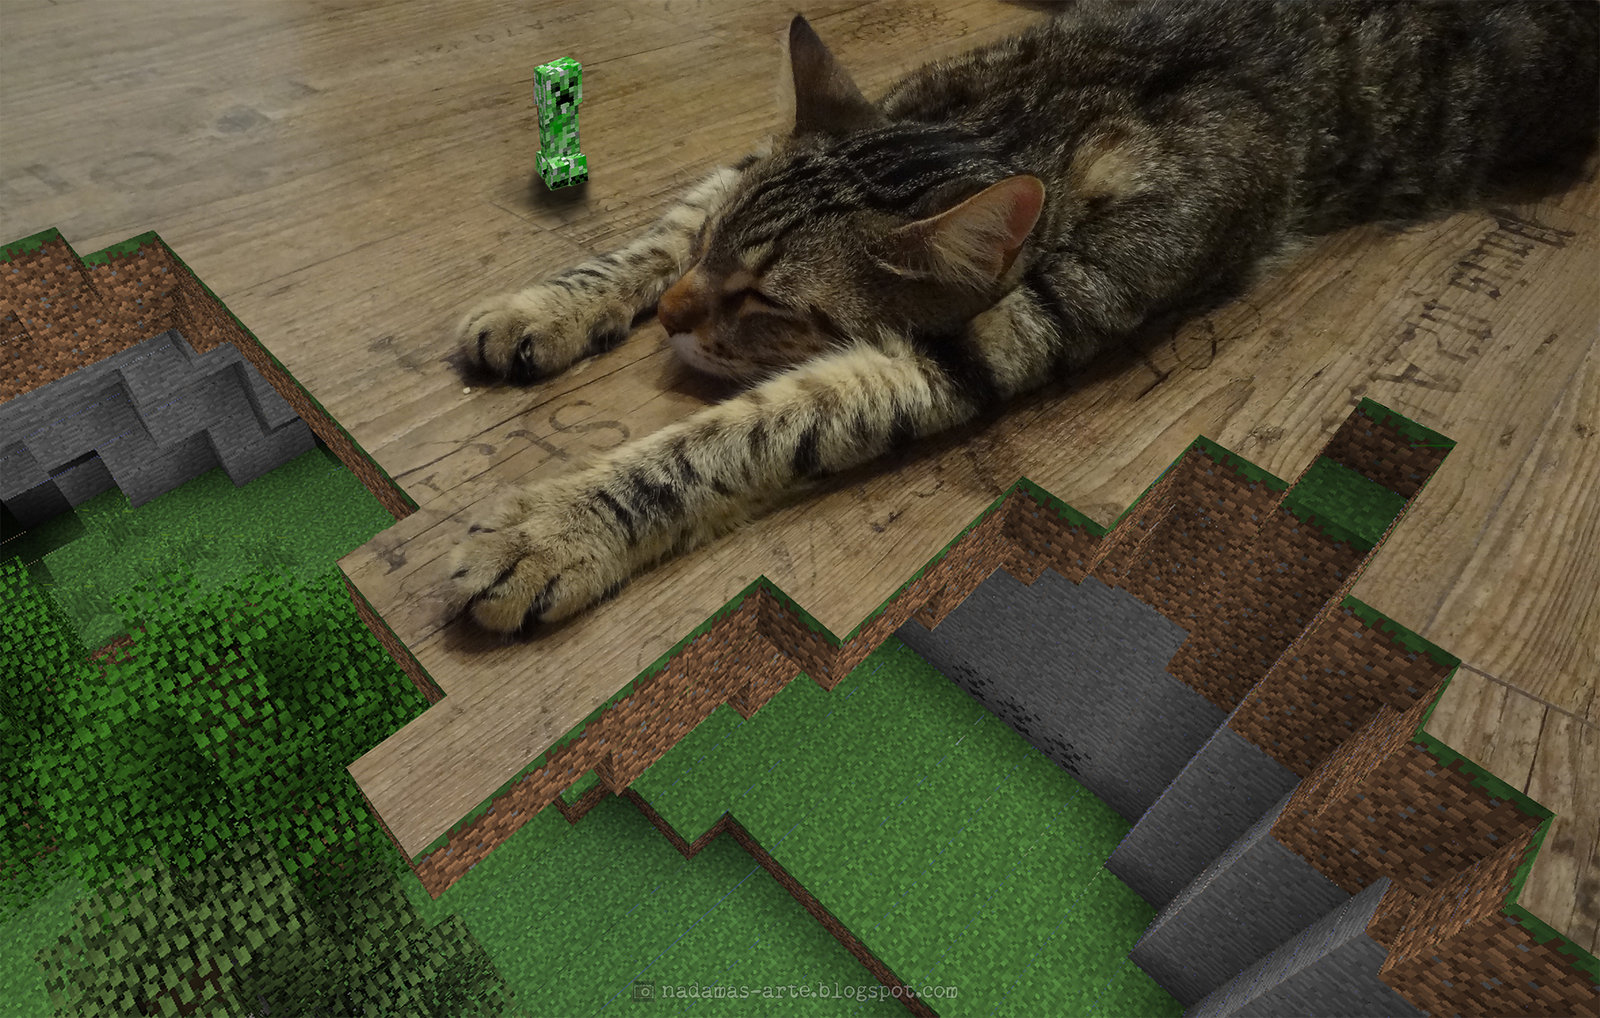 minecraft cat Wallpapers